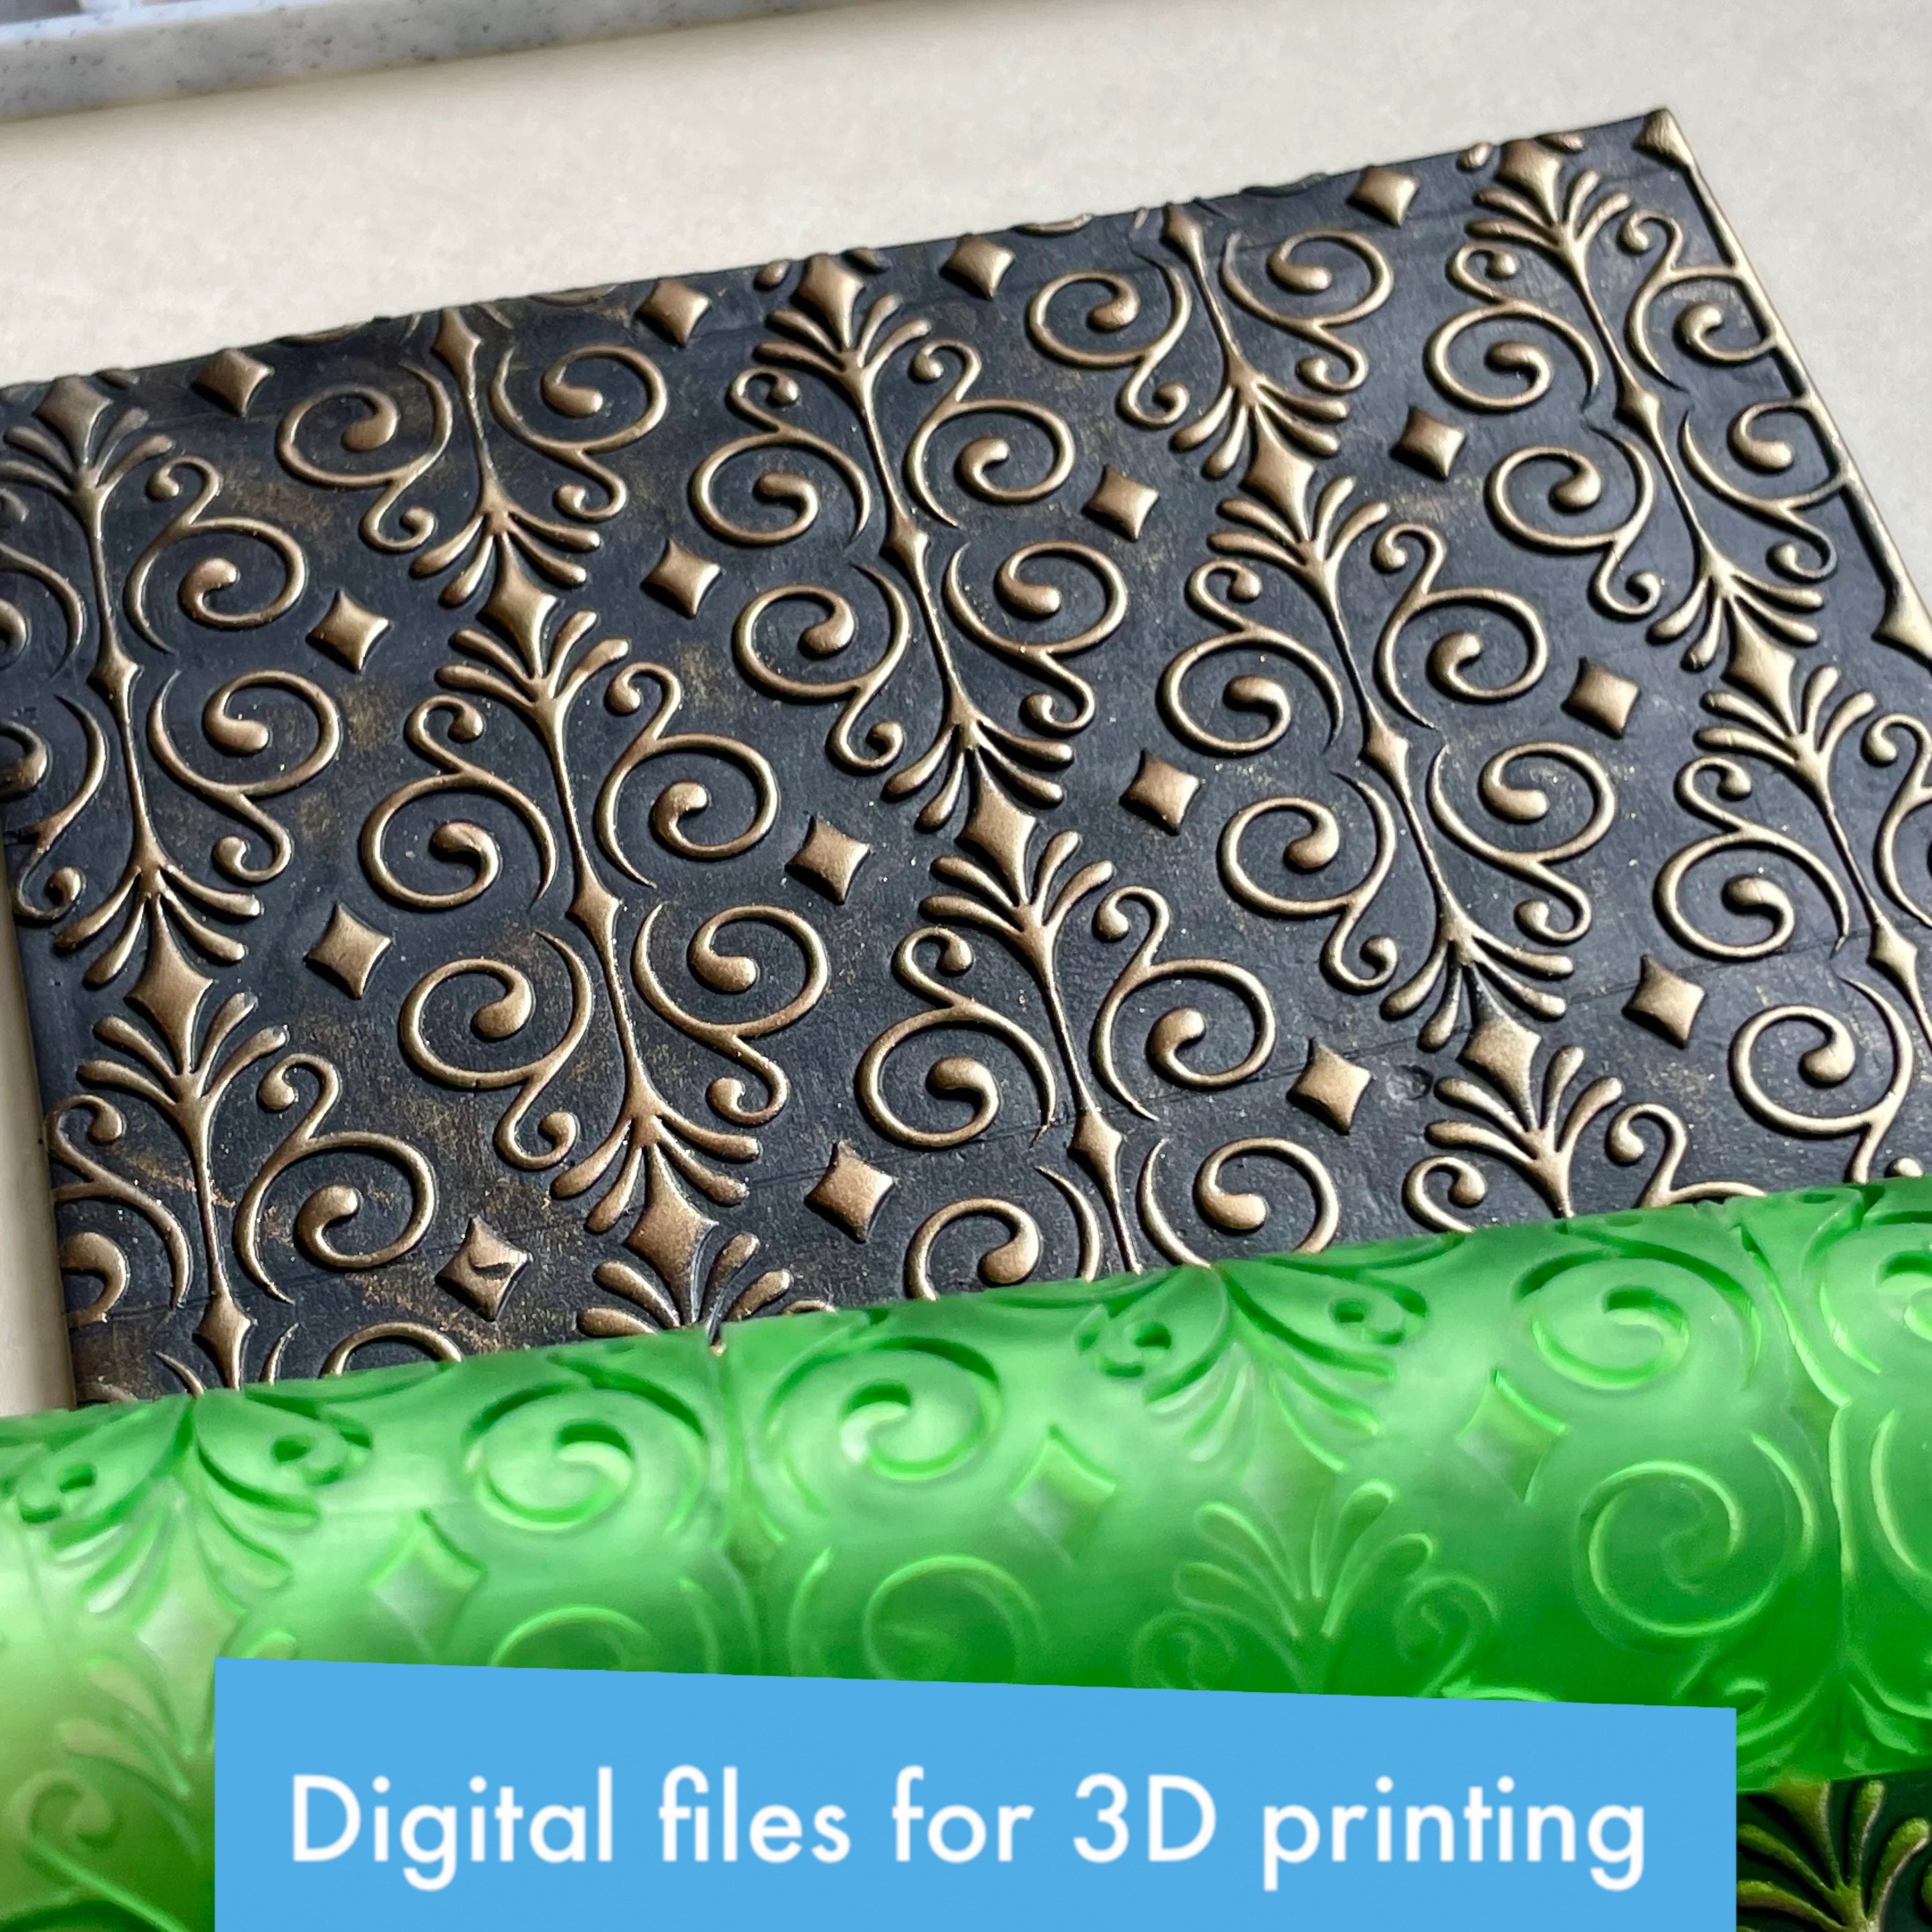 Digital STL File Flowerstexture Roller for Polymer Clay, Diy